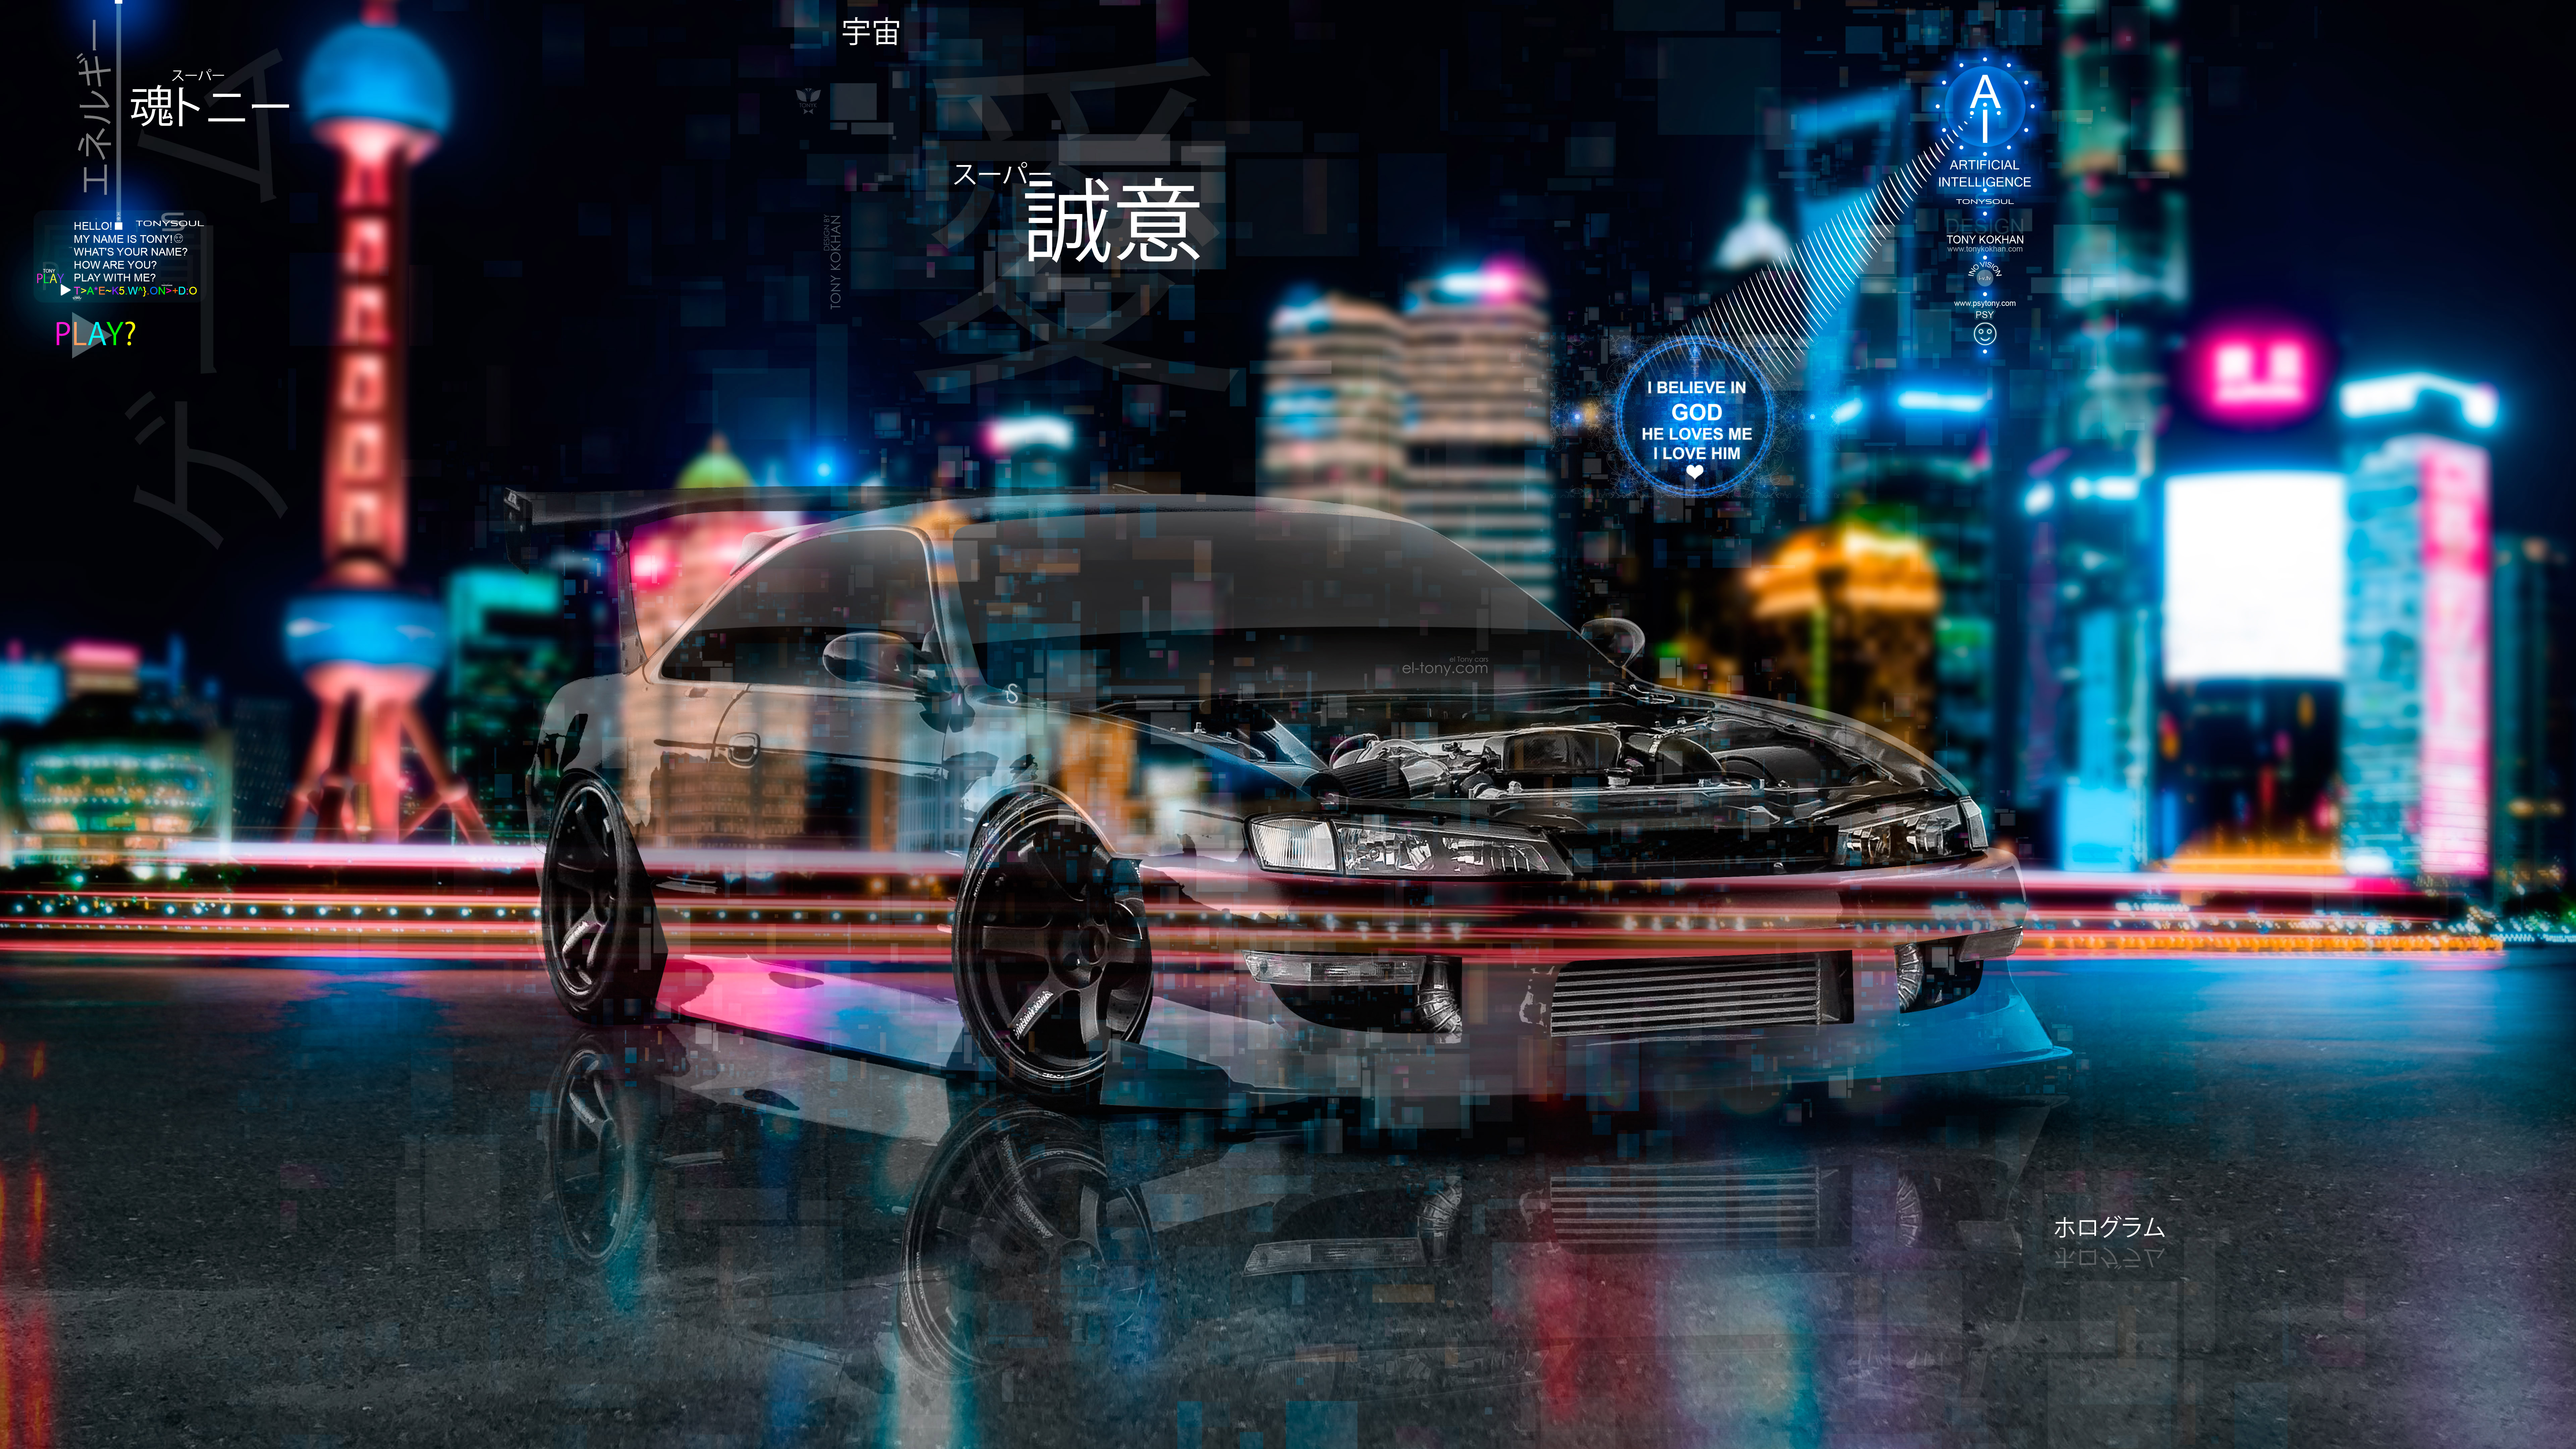 Nissan-Silvia-S14-JDM-Tuning-Open-Engine-Super-Crystal-Sincerity-TonySoul-Artificial-Intelligence-Night-City-Art-Car